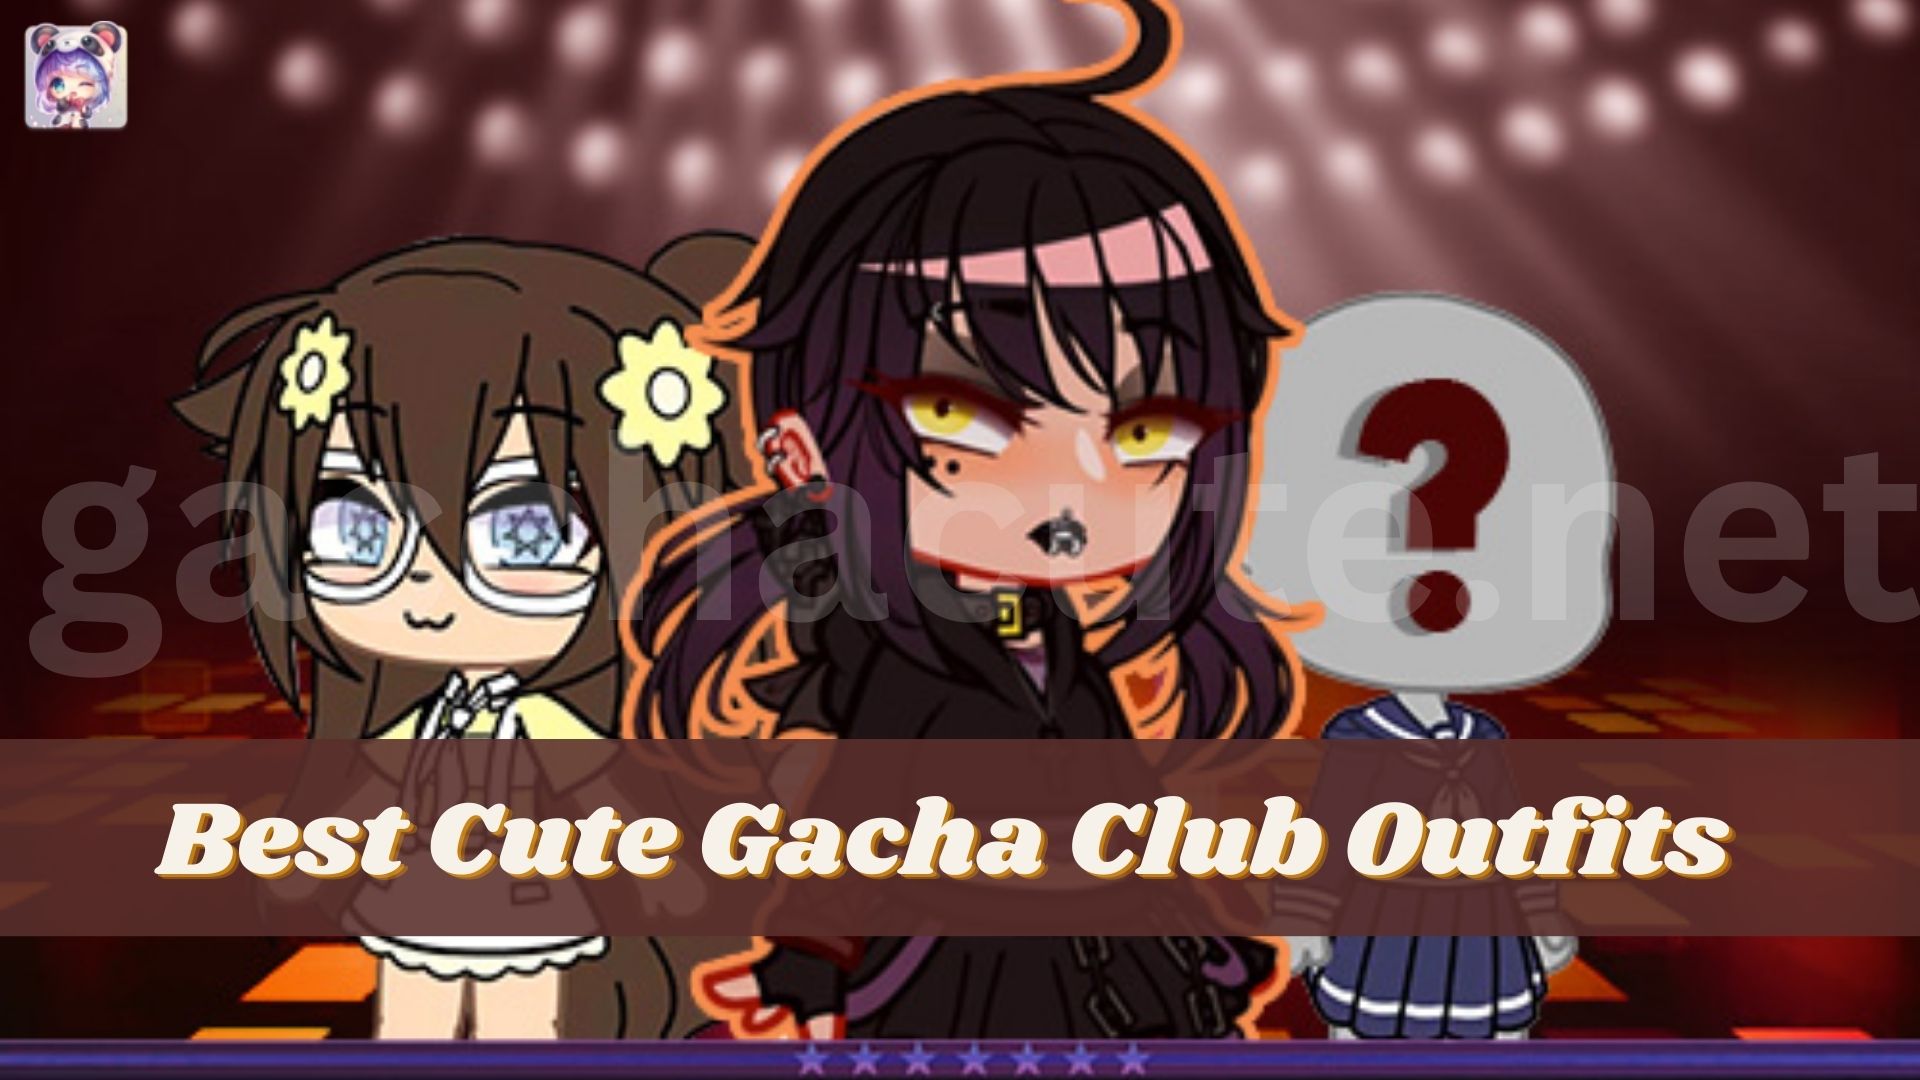 Gacha club outfit idea  Club outfits, Club outfit ideas, Club design